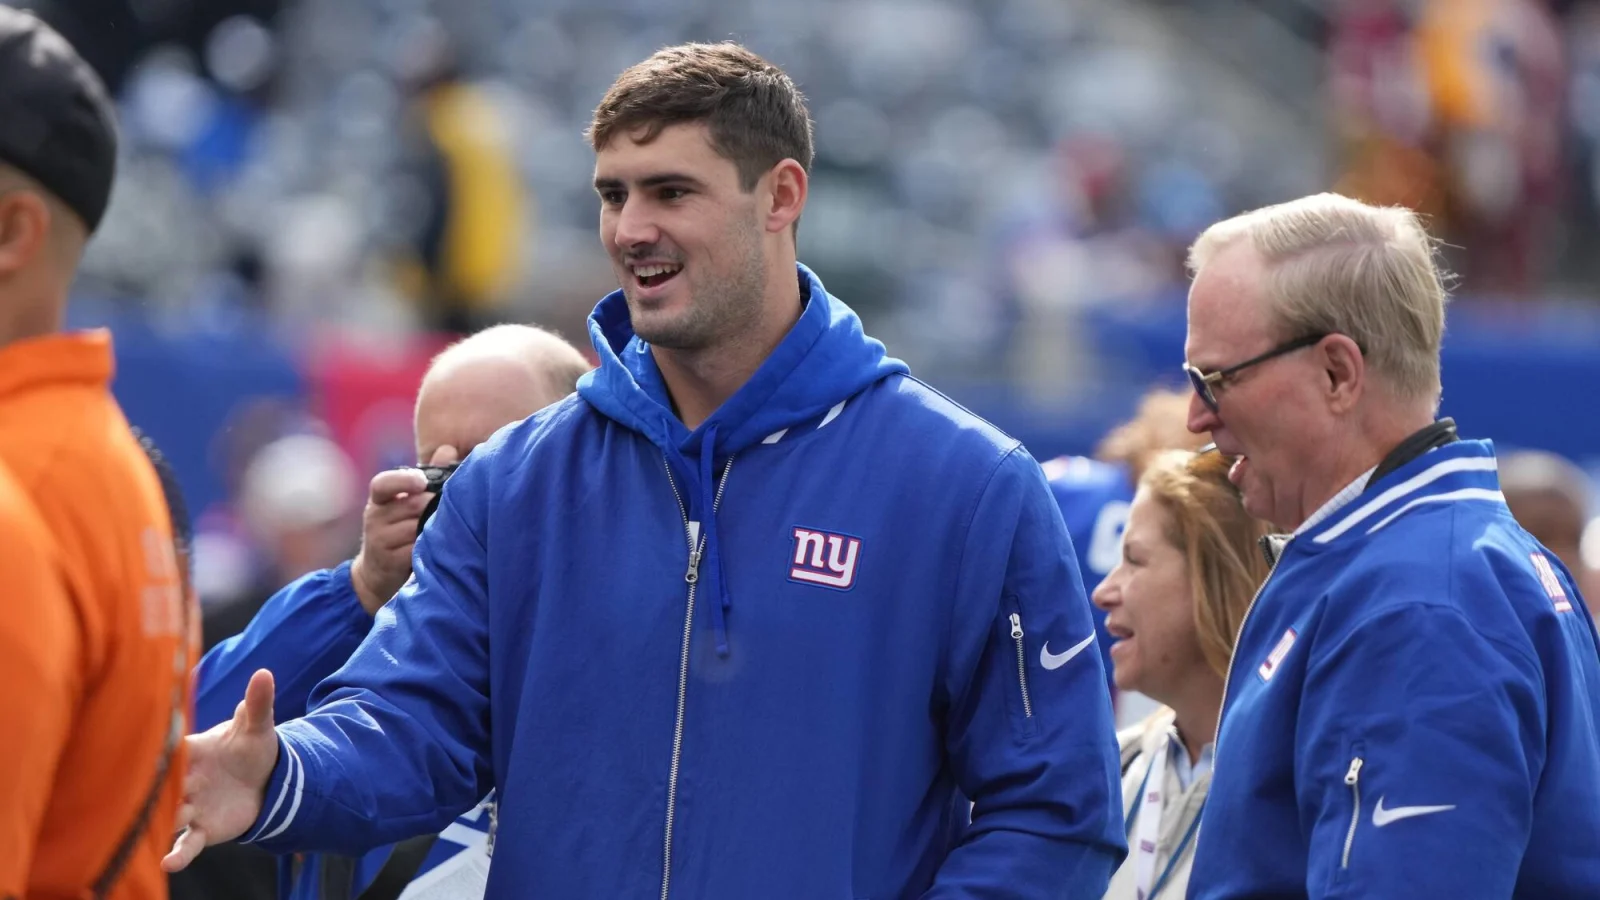 NFL News: New York Giants’ Draft Strategy Signals Change, Potential End to Daniel Jones’ Era in New York